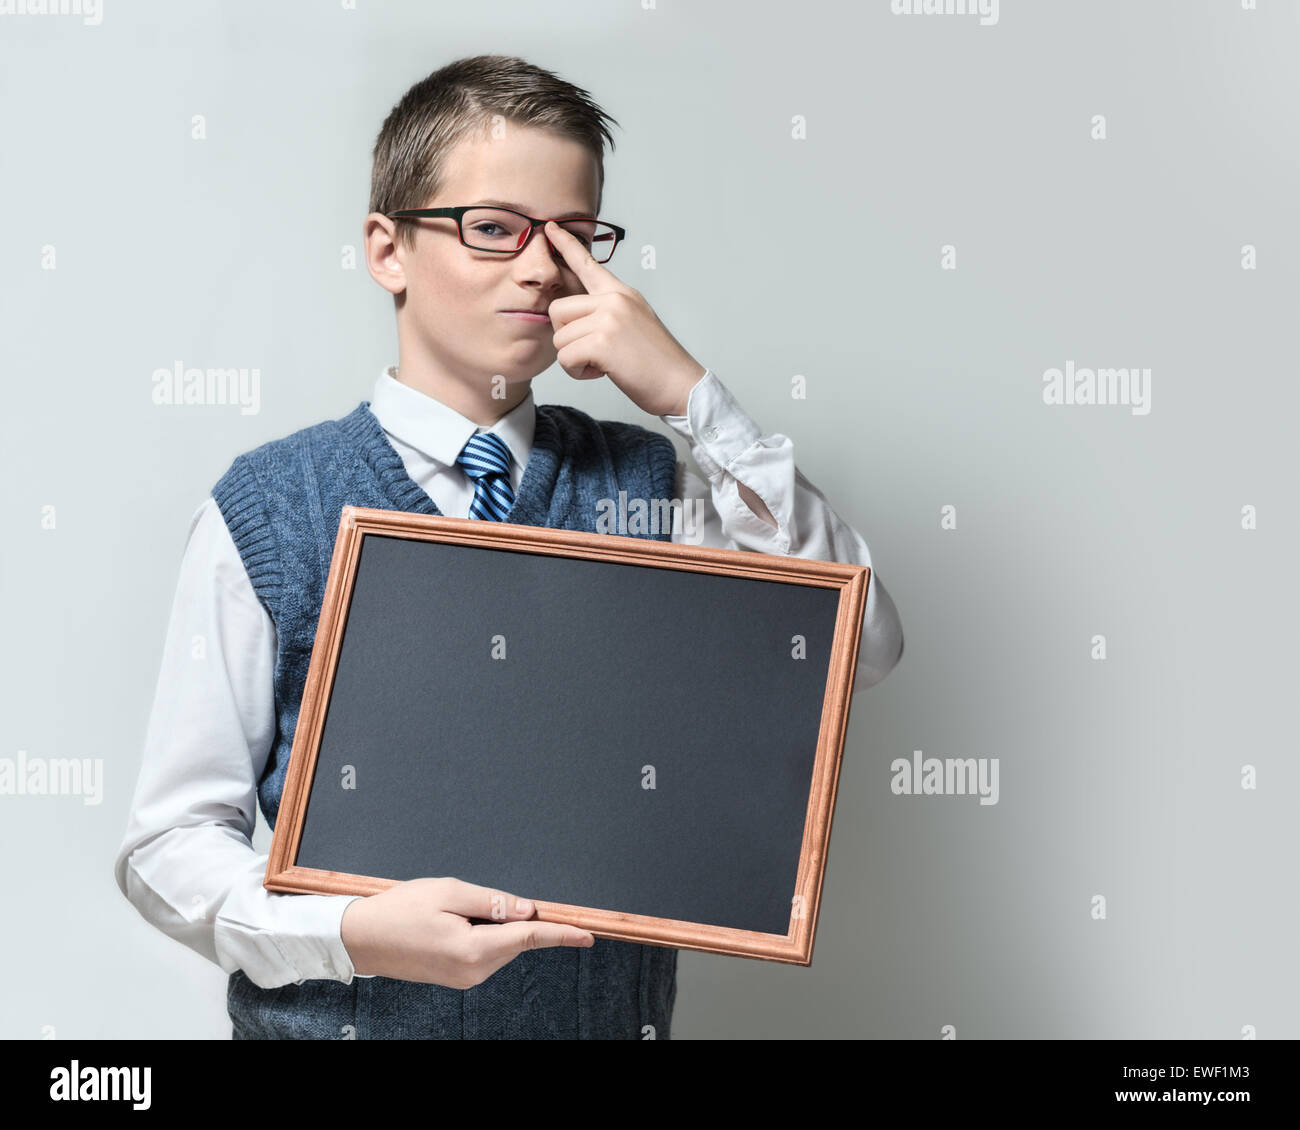 Smart schoolboy in glasses with empty chalkboard Stock Photo